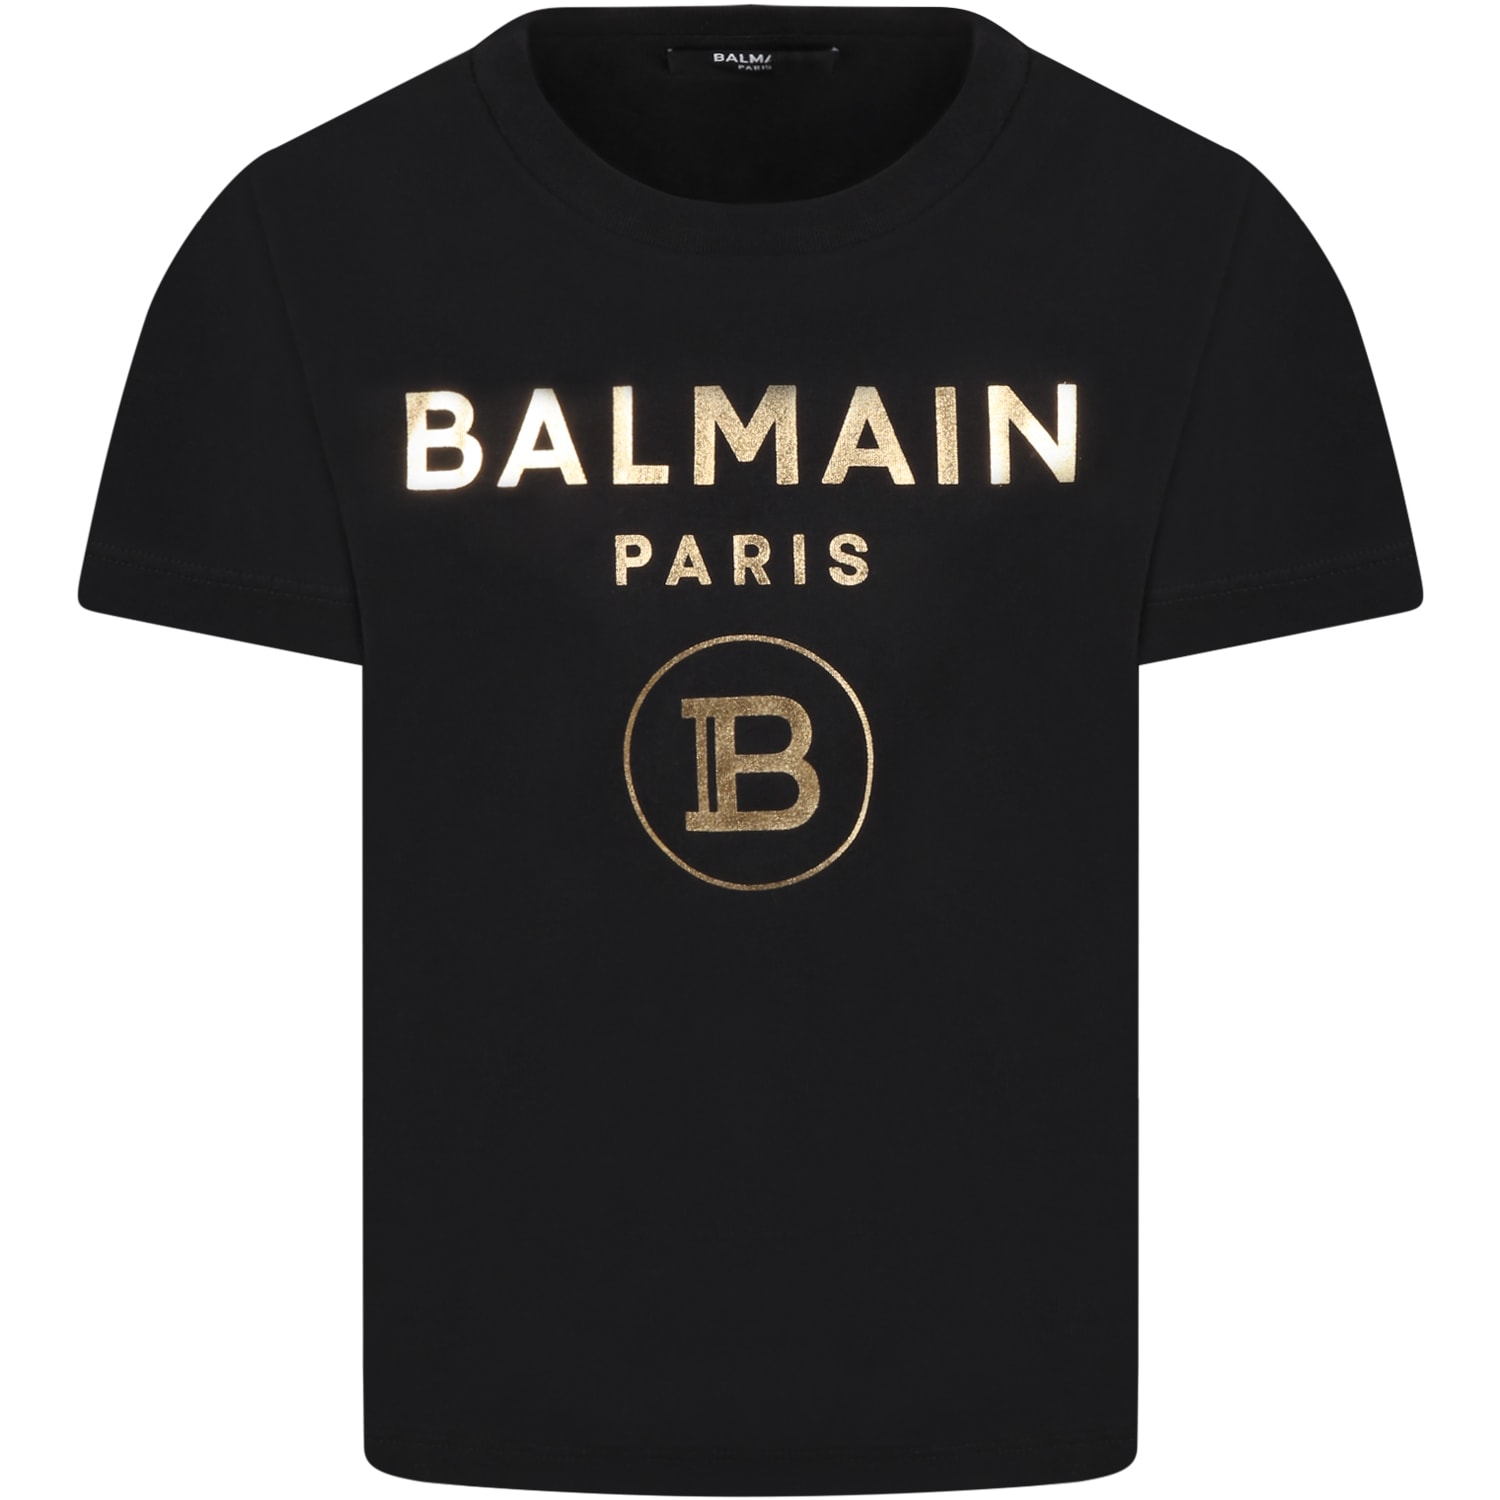 Balmain Black T-shirt For Kids With Gold Logos